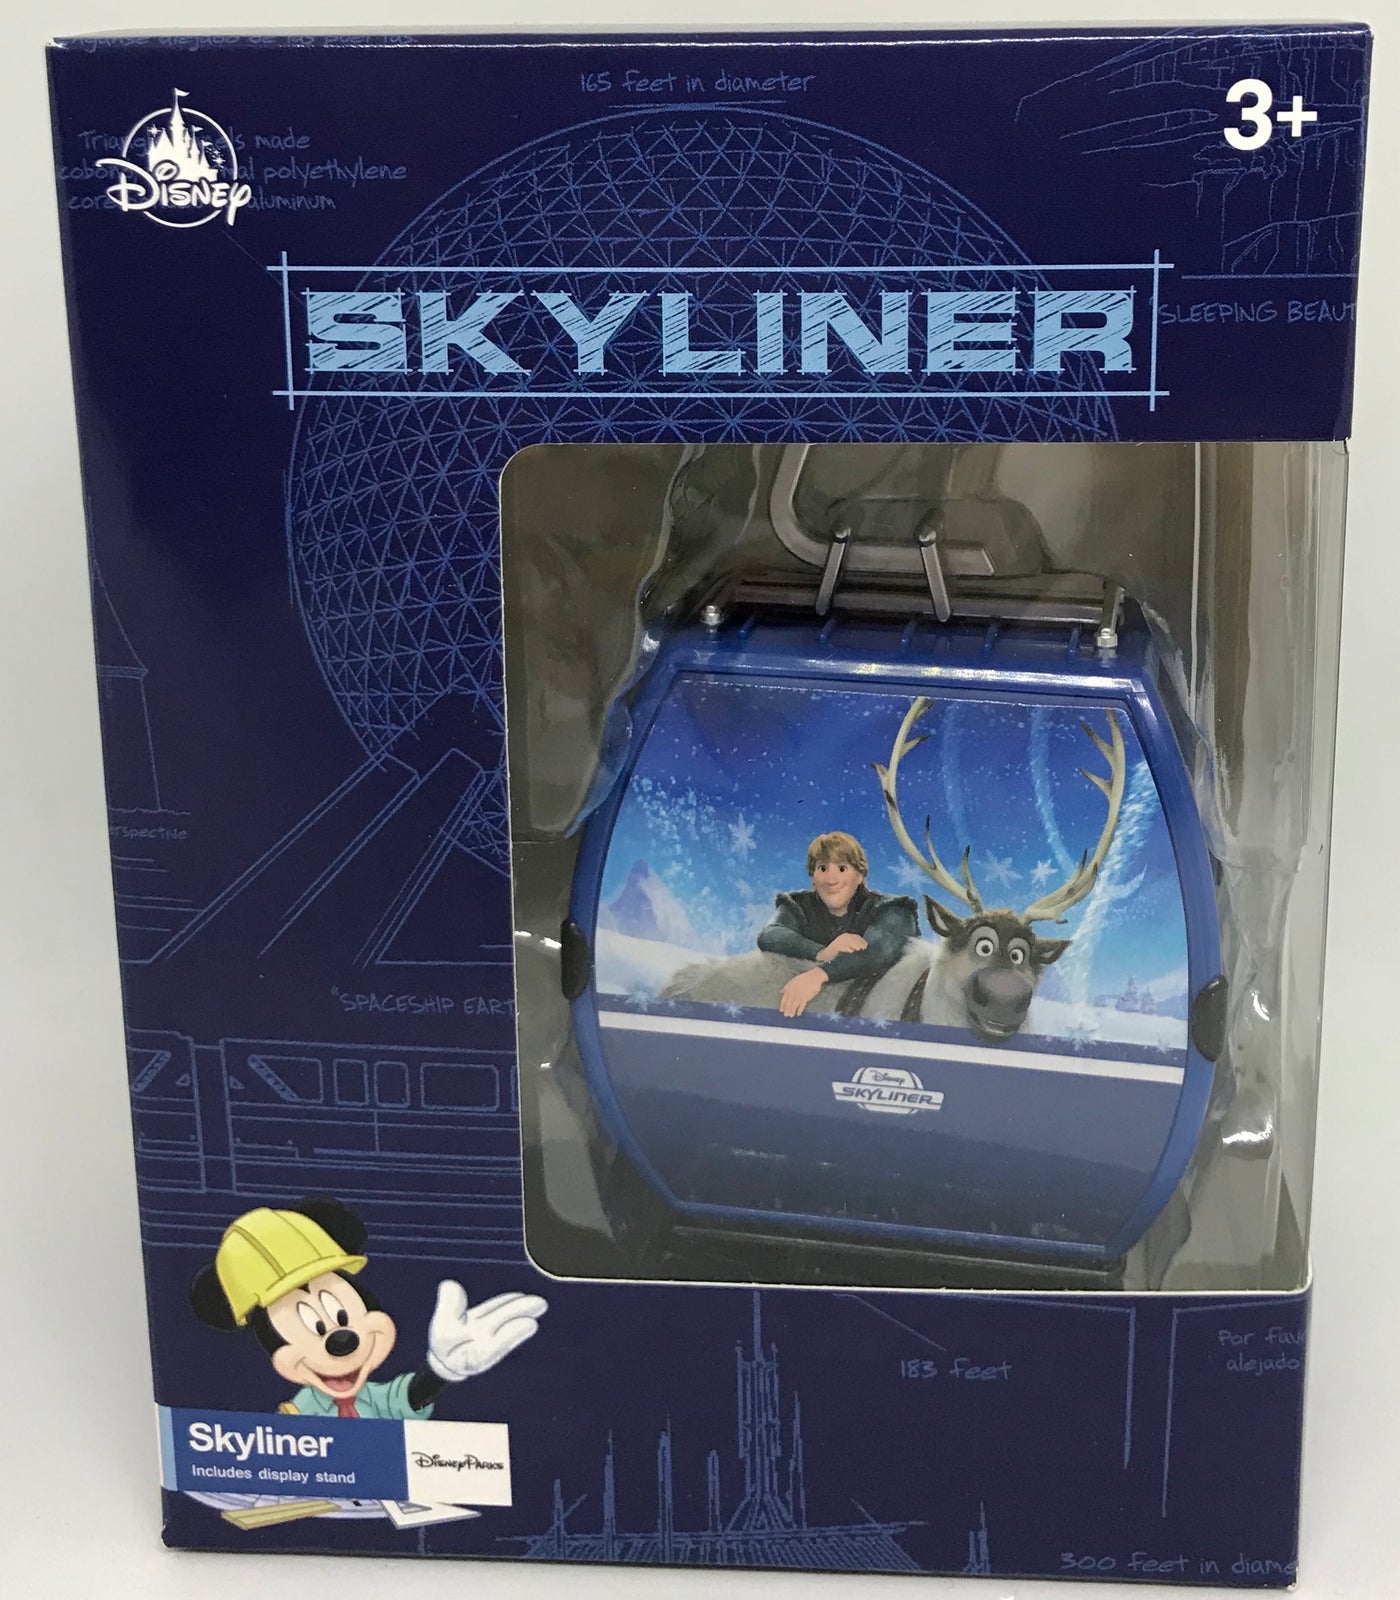 Disney Parks Frozen Skyliner Collectible Toy Kristoff Sven Anna Elsa Olaf New